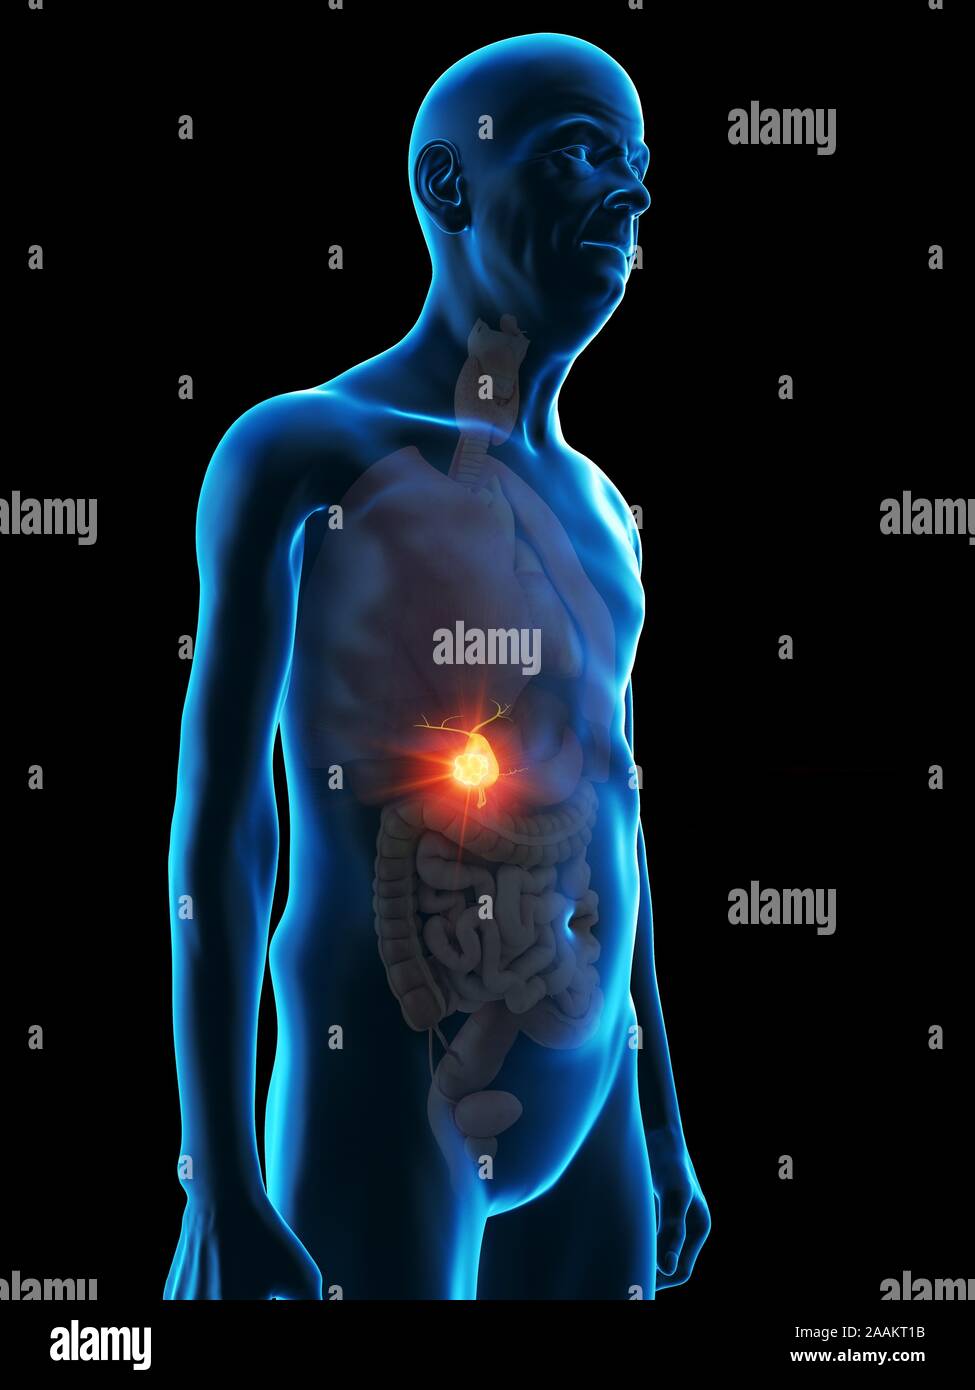 Illustration of an old man's gallbladder tumour Stock Photo - Alamy